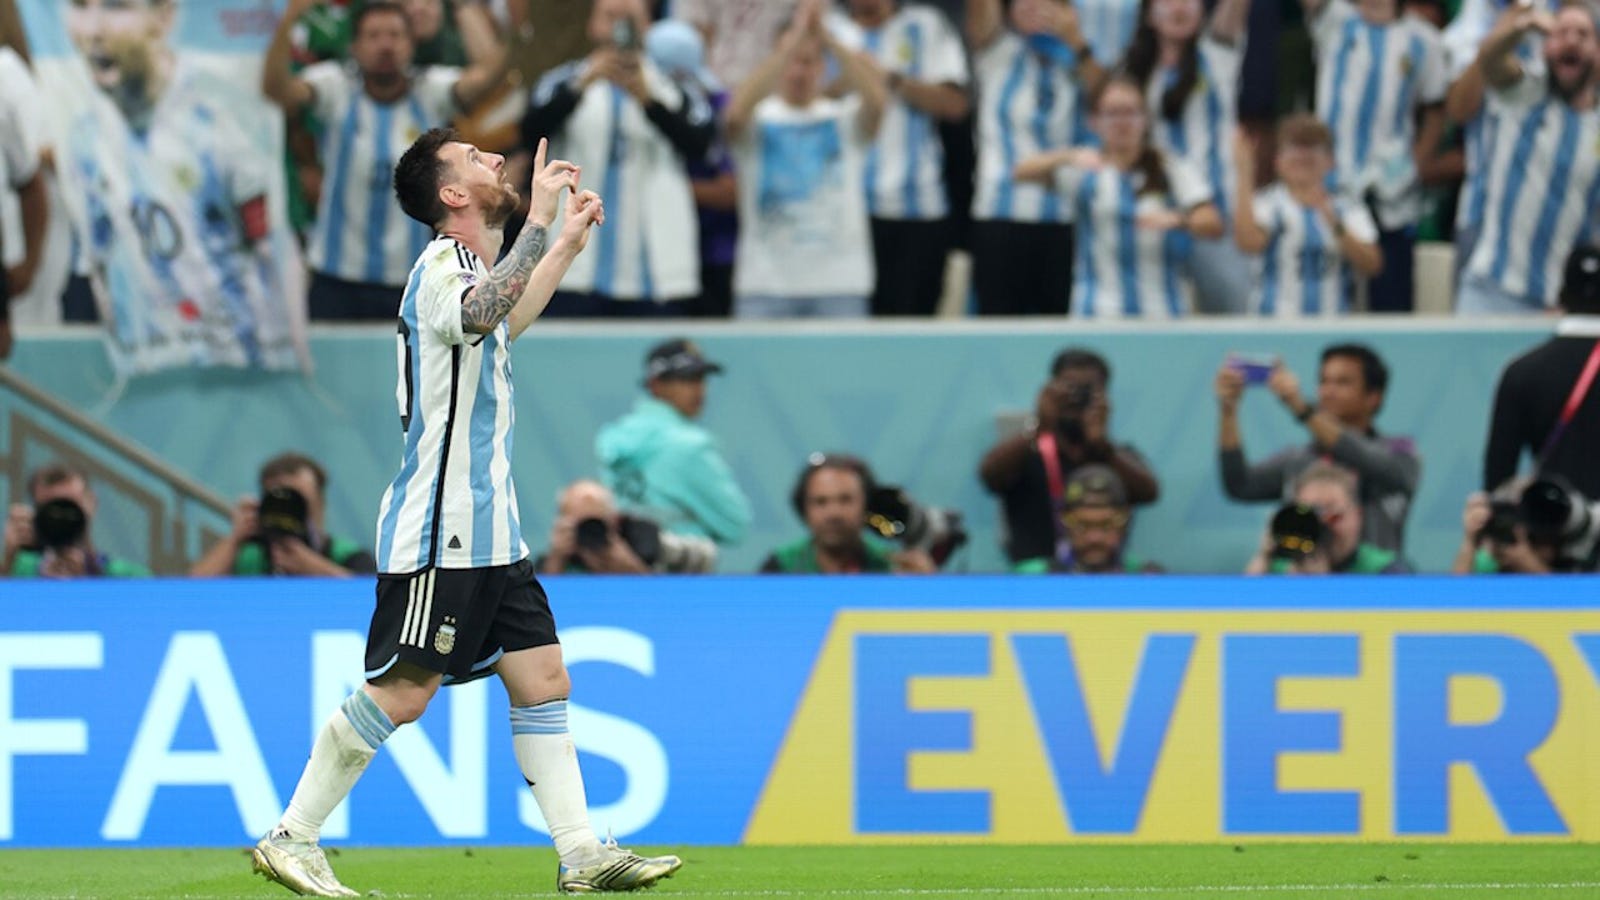 Argentina's Lionel Messi scores goal vs. Mexico in 64'